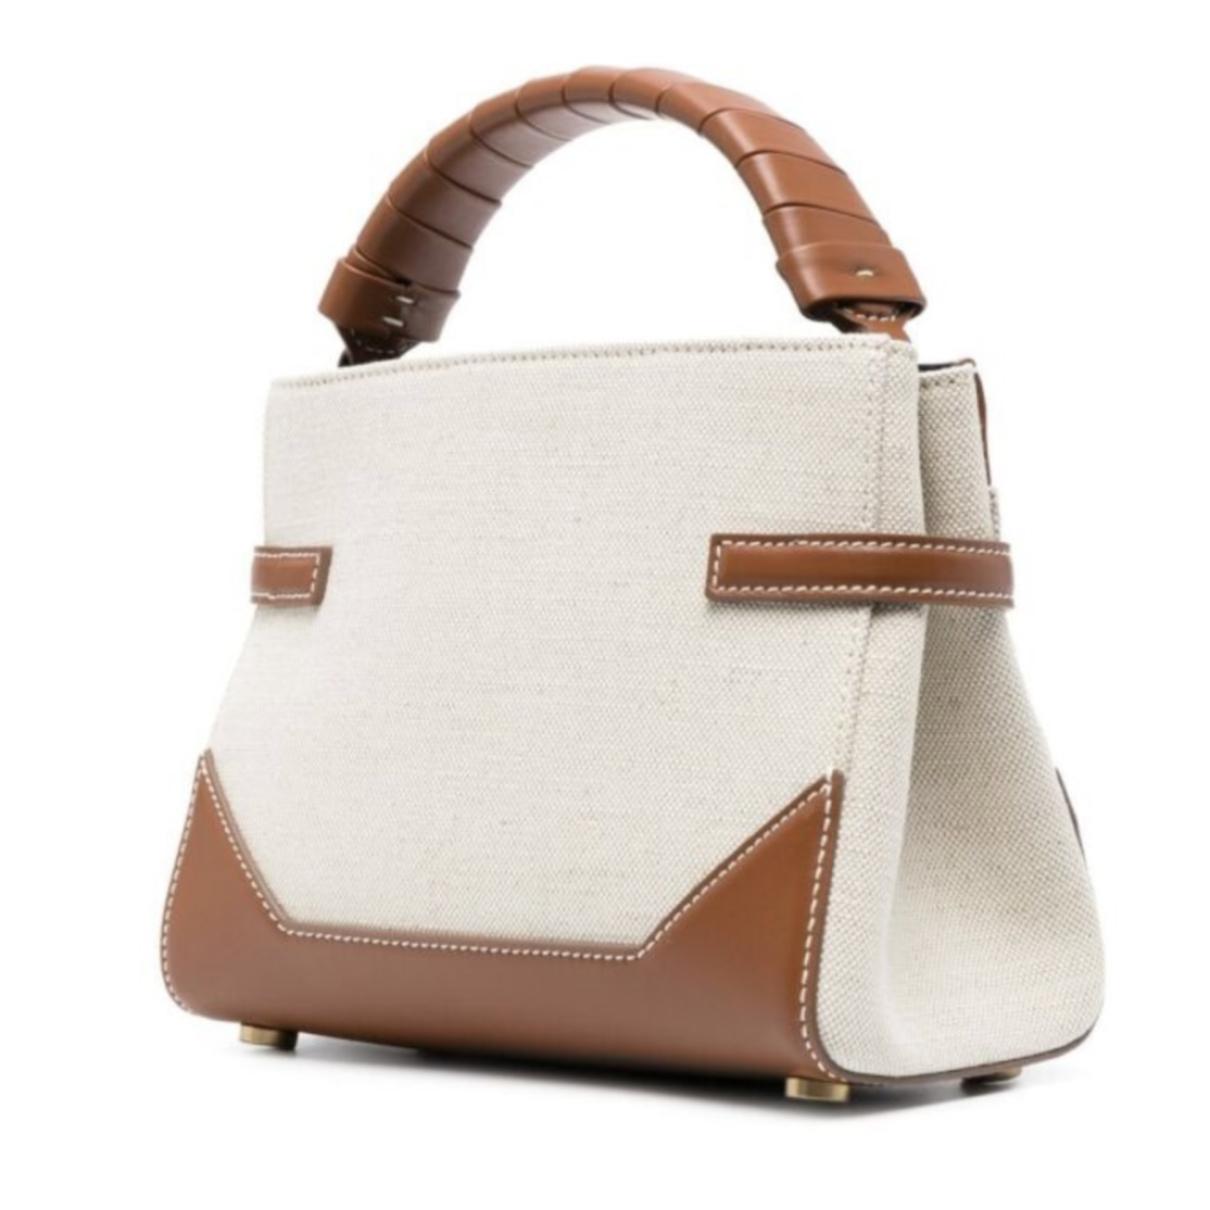 BBuzz leather satchel - 5